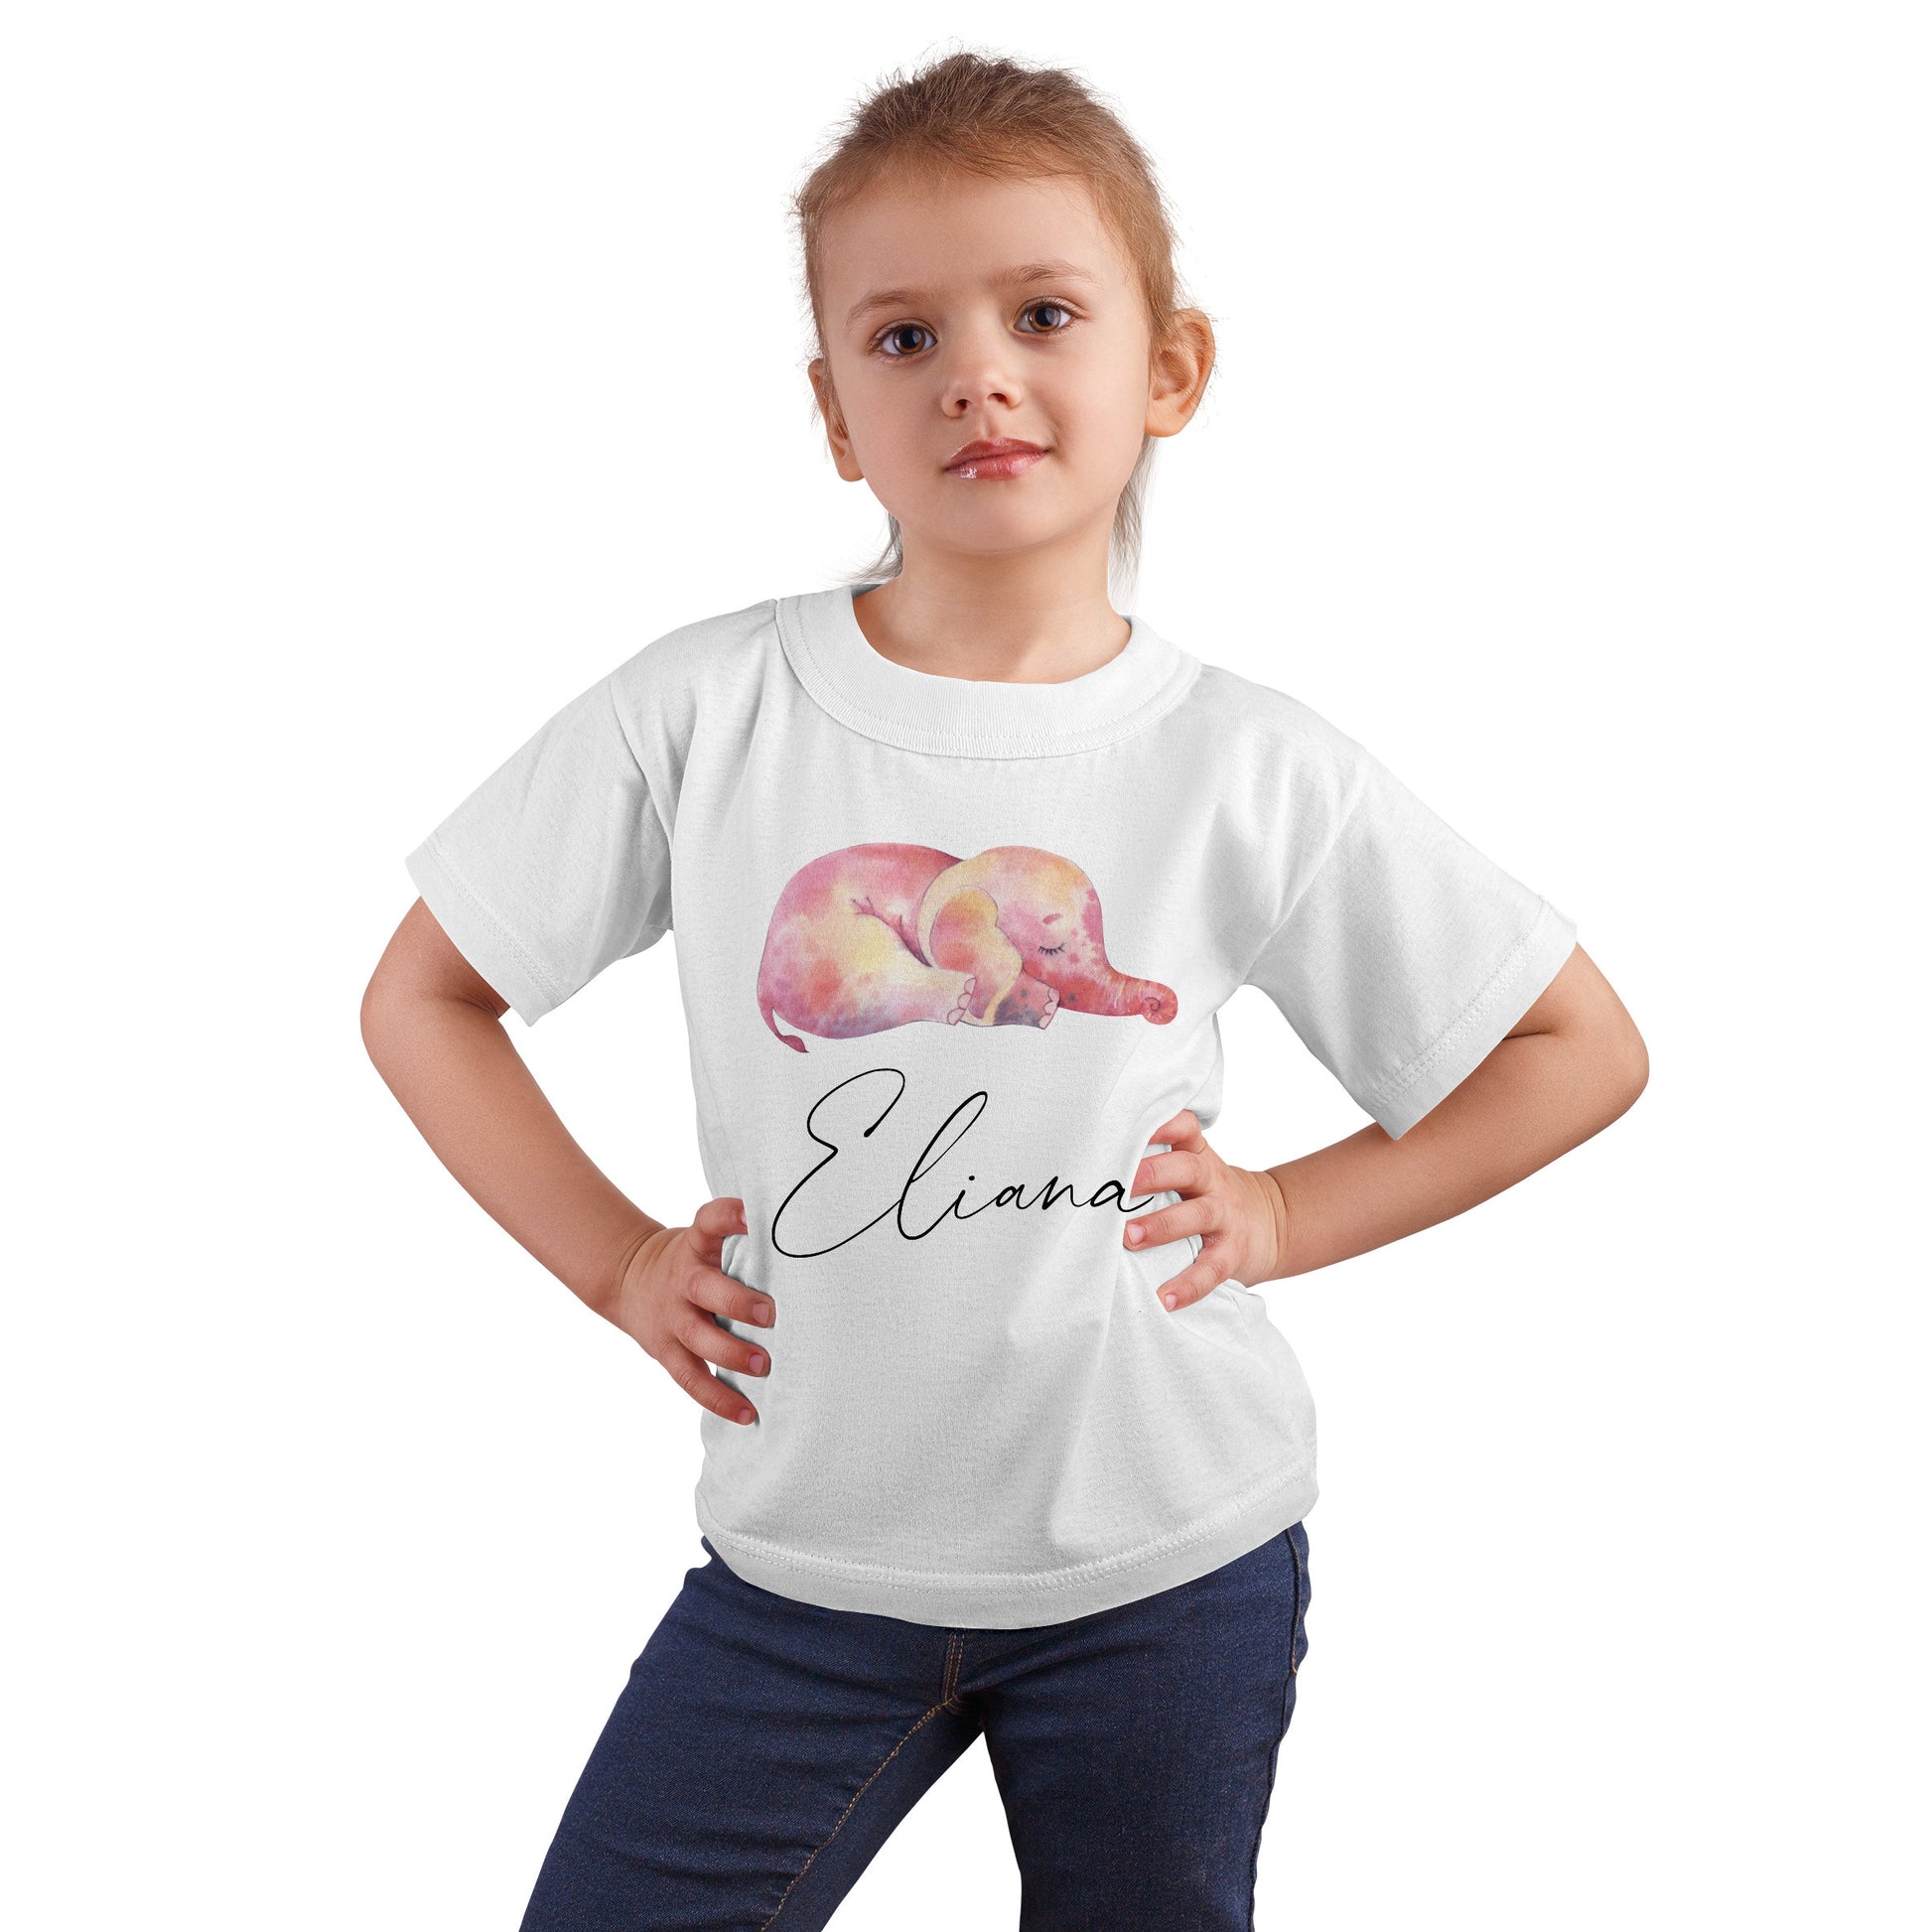 Personalised Children's Unisex T-Shirt, Sleeping Elephant Design With Name, Custom Clothing, Kids Tee, Girls, Boys